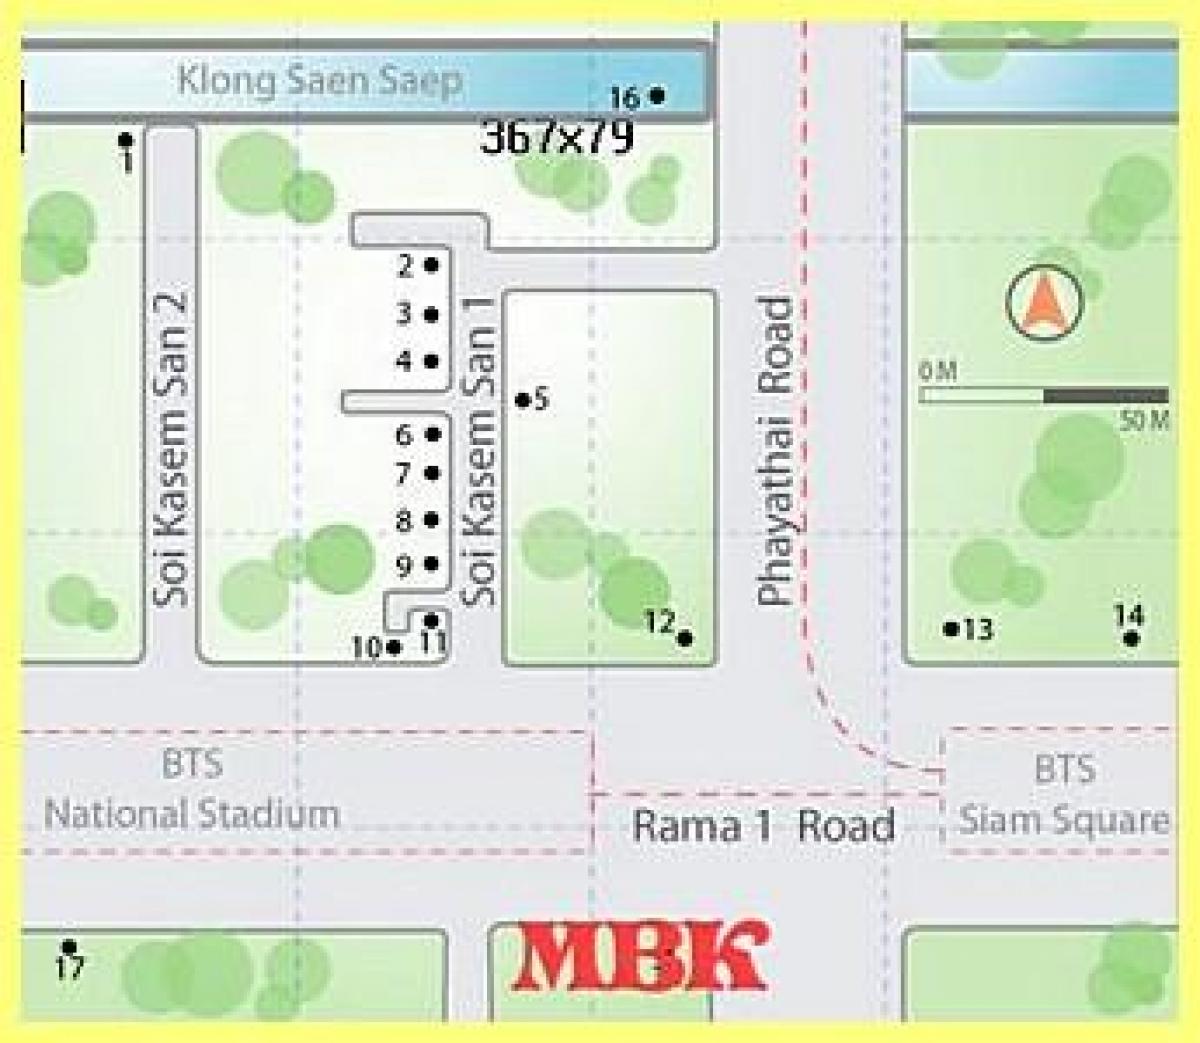 mbk للتسوق في بانكوك خريطة